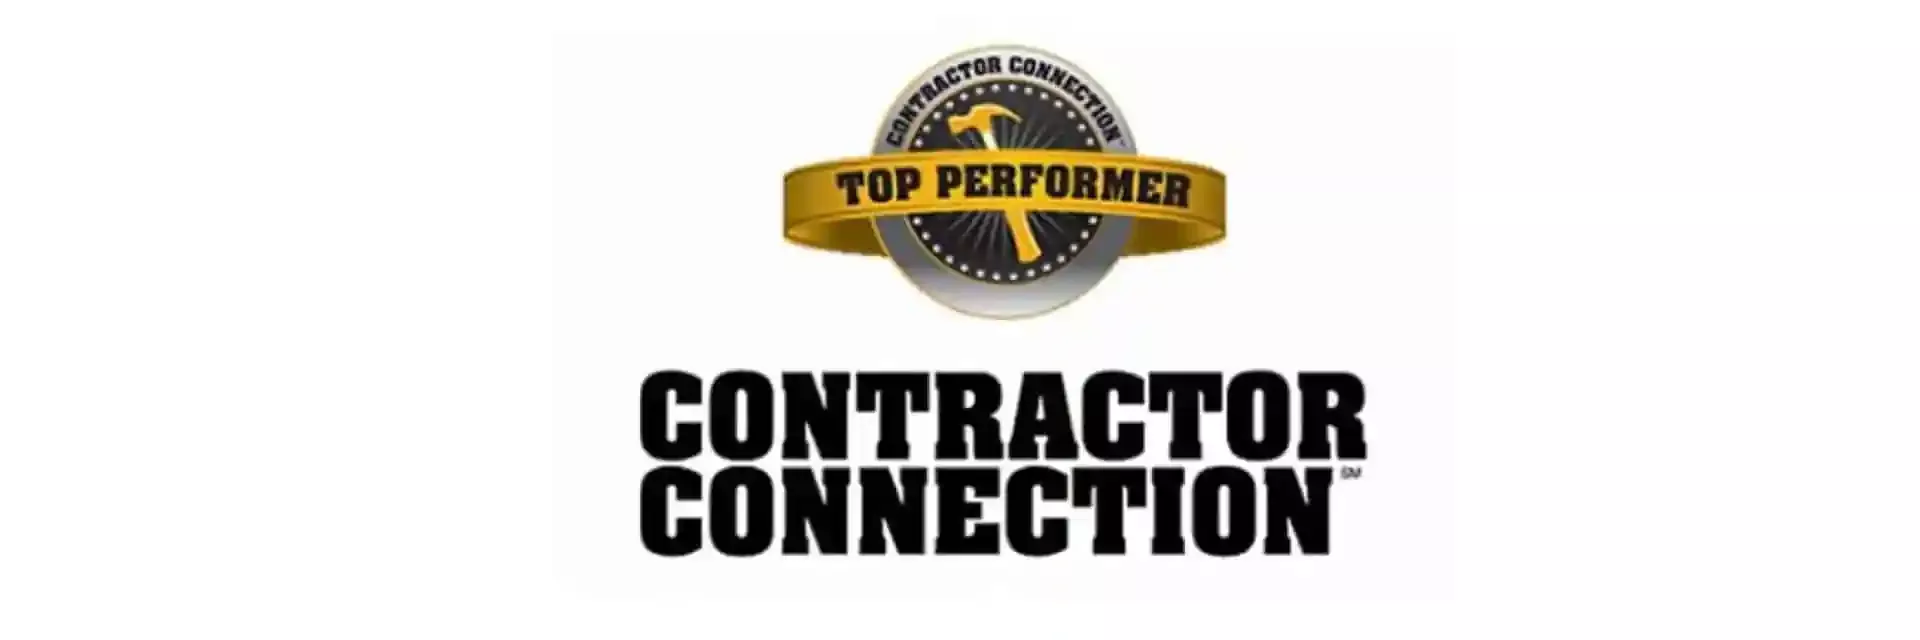 Contractor Connection Golden Hammer logo